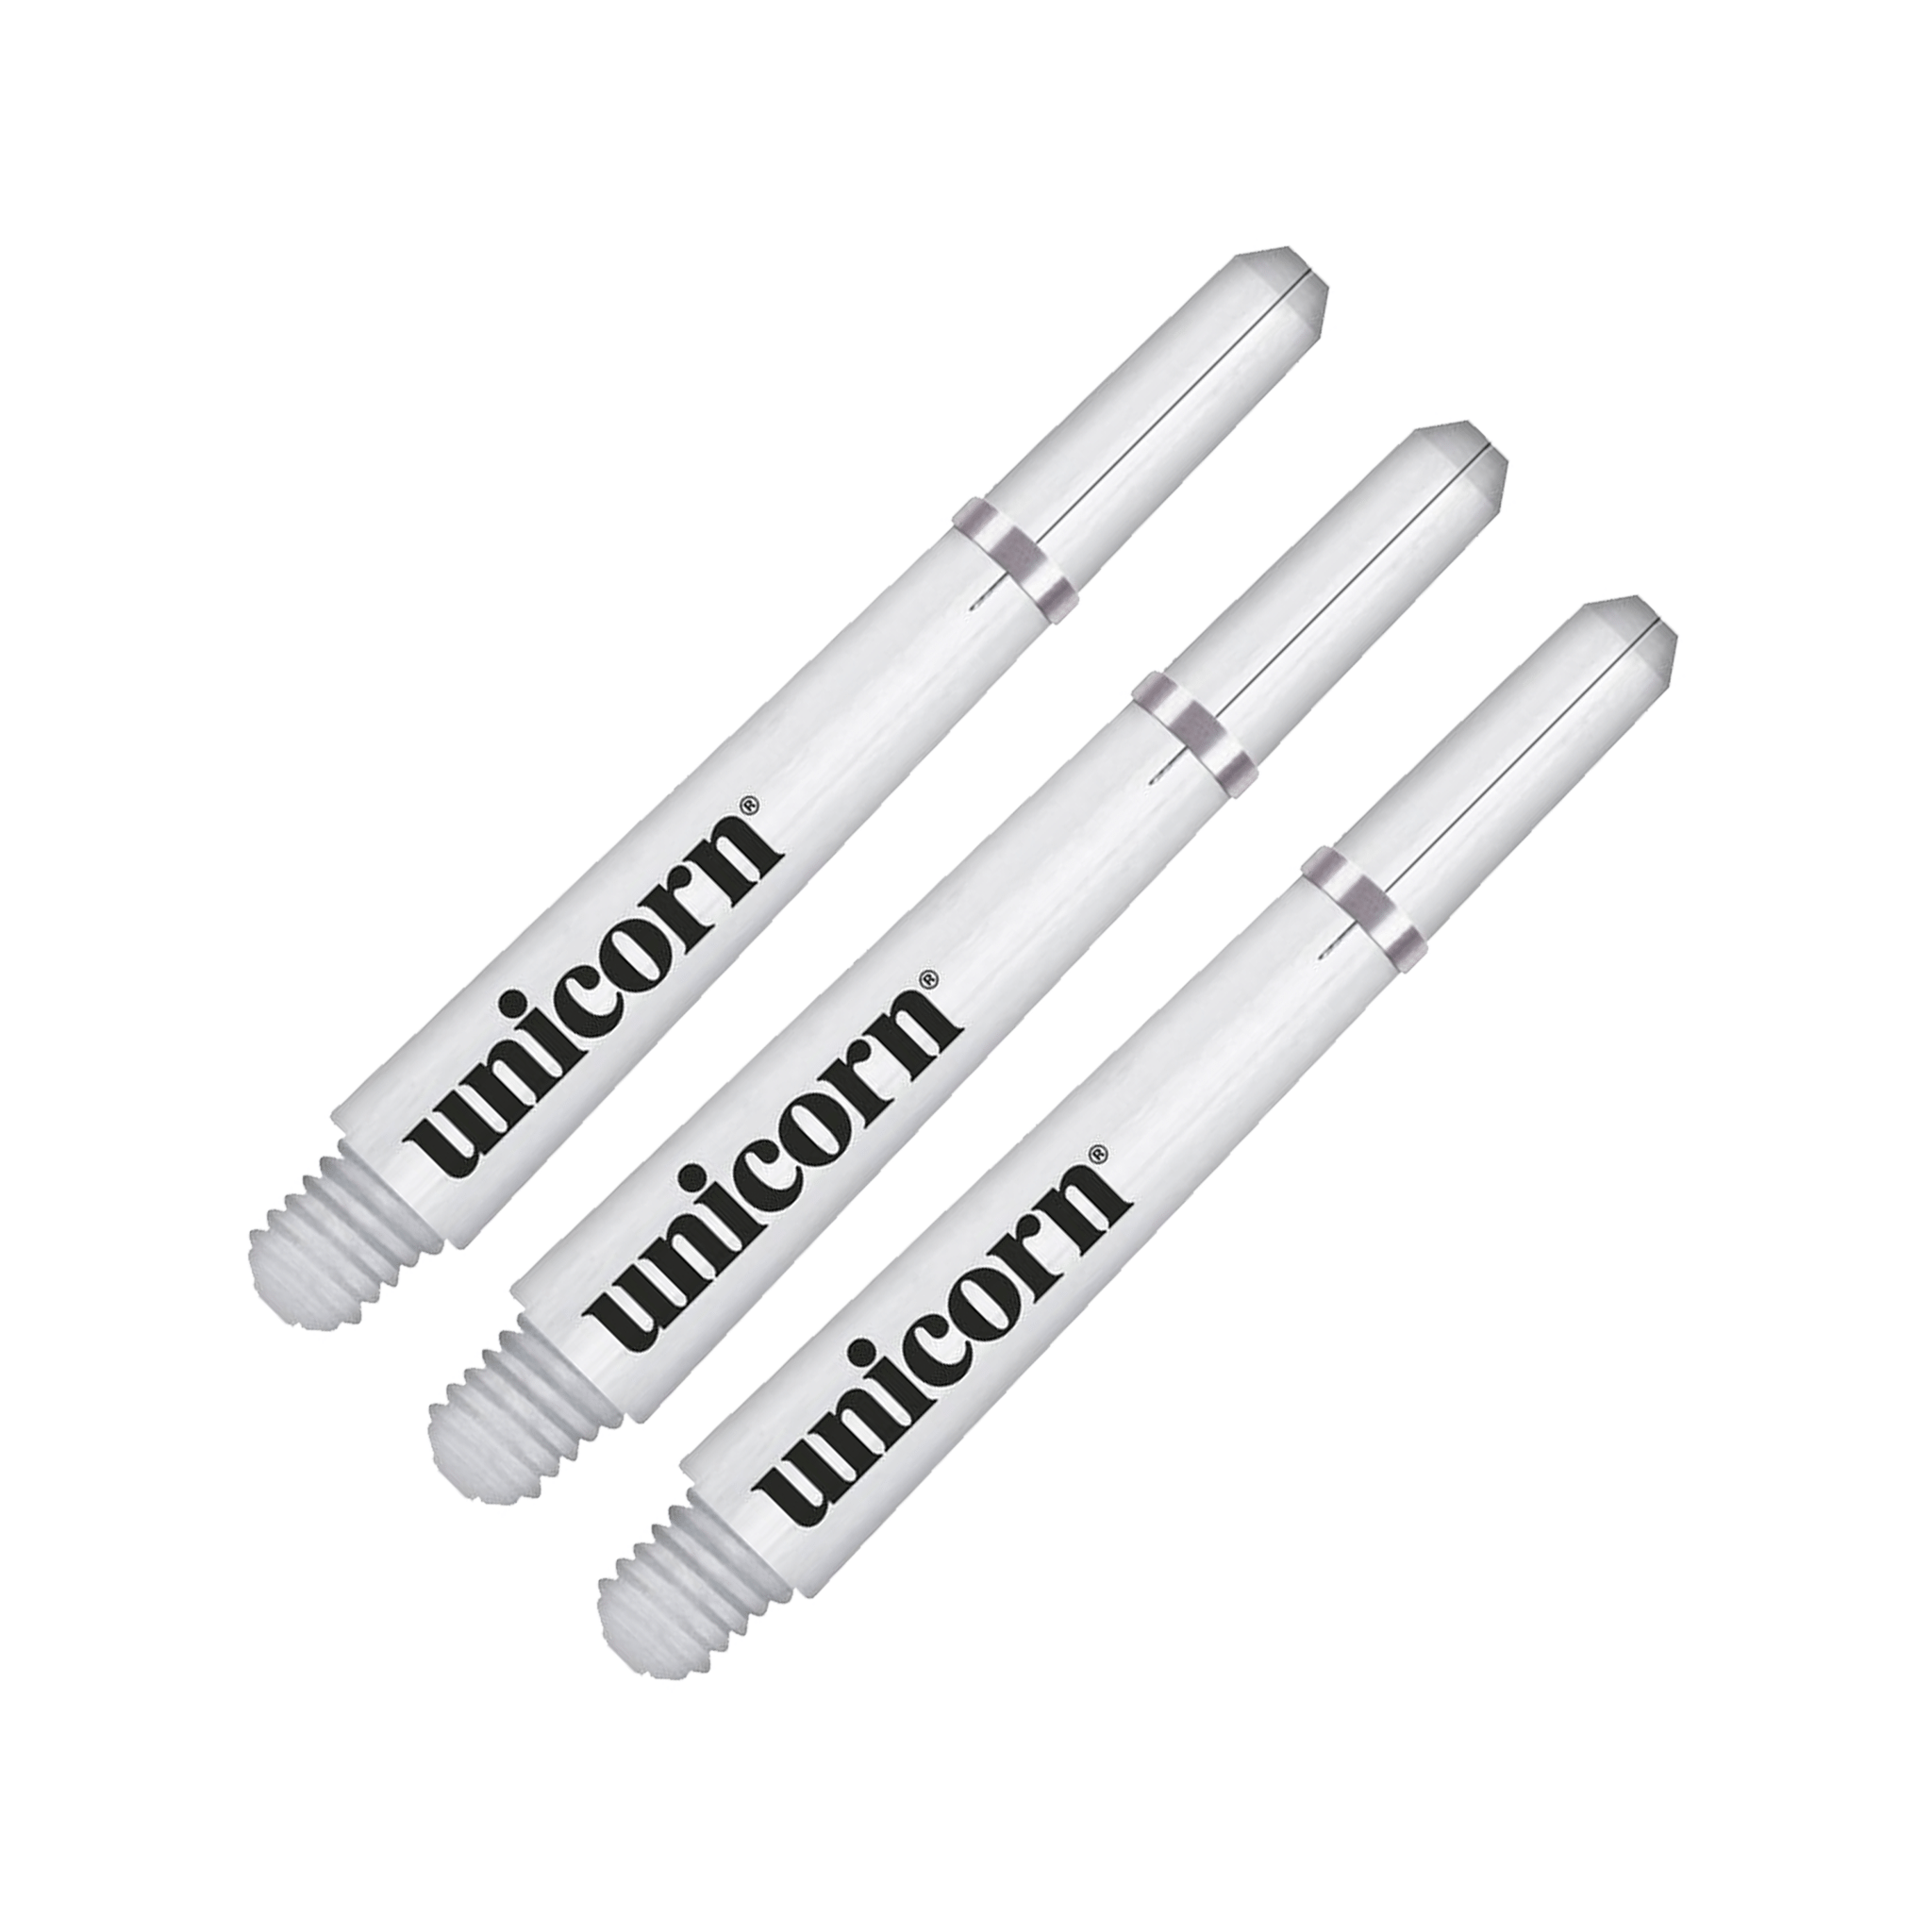 Unicorn Gripper 4 Polycarbonate Dart Shafts Clear / Medium (41mm ) Shafts